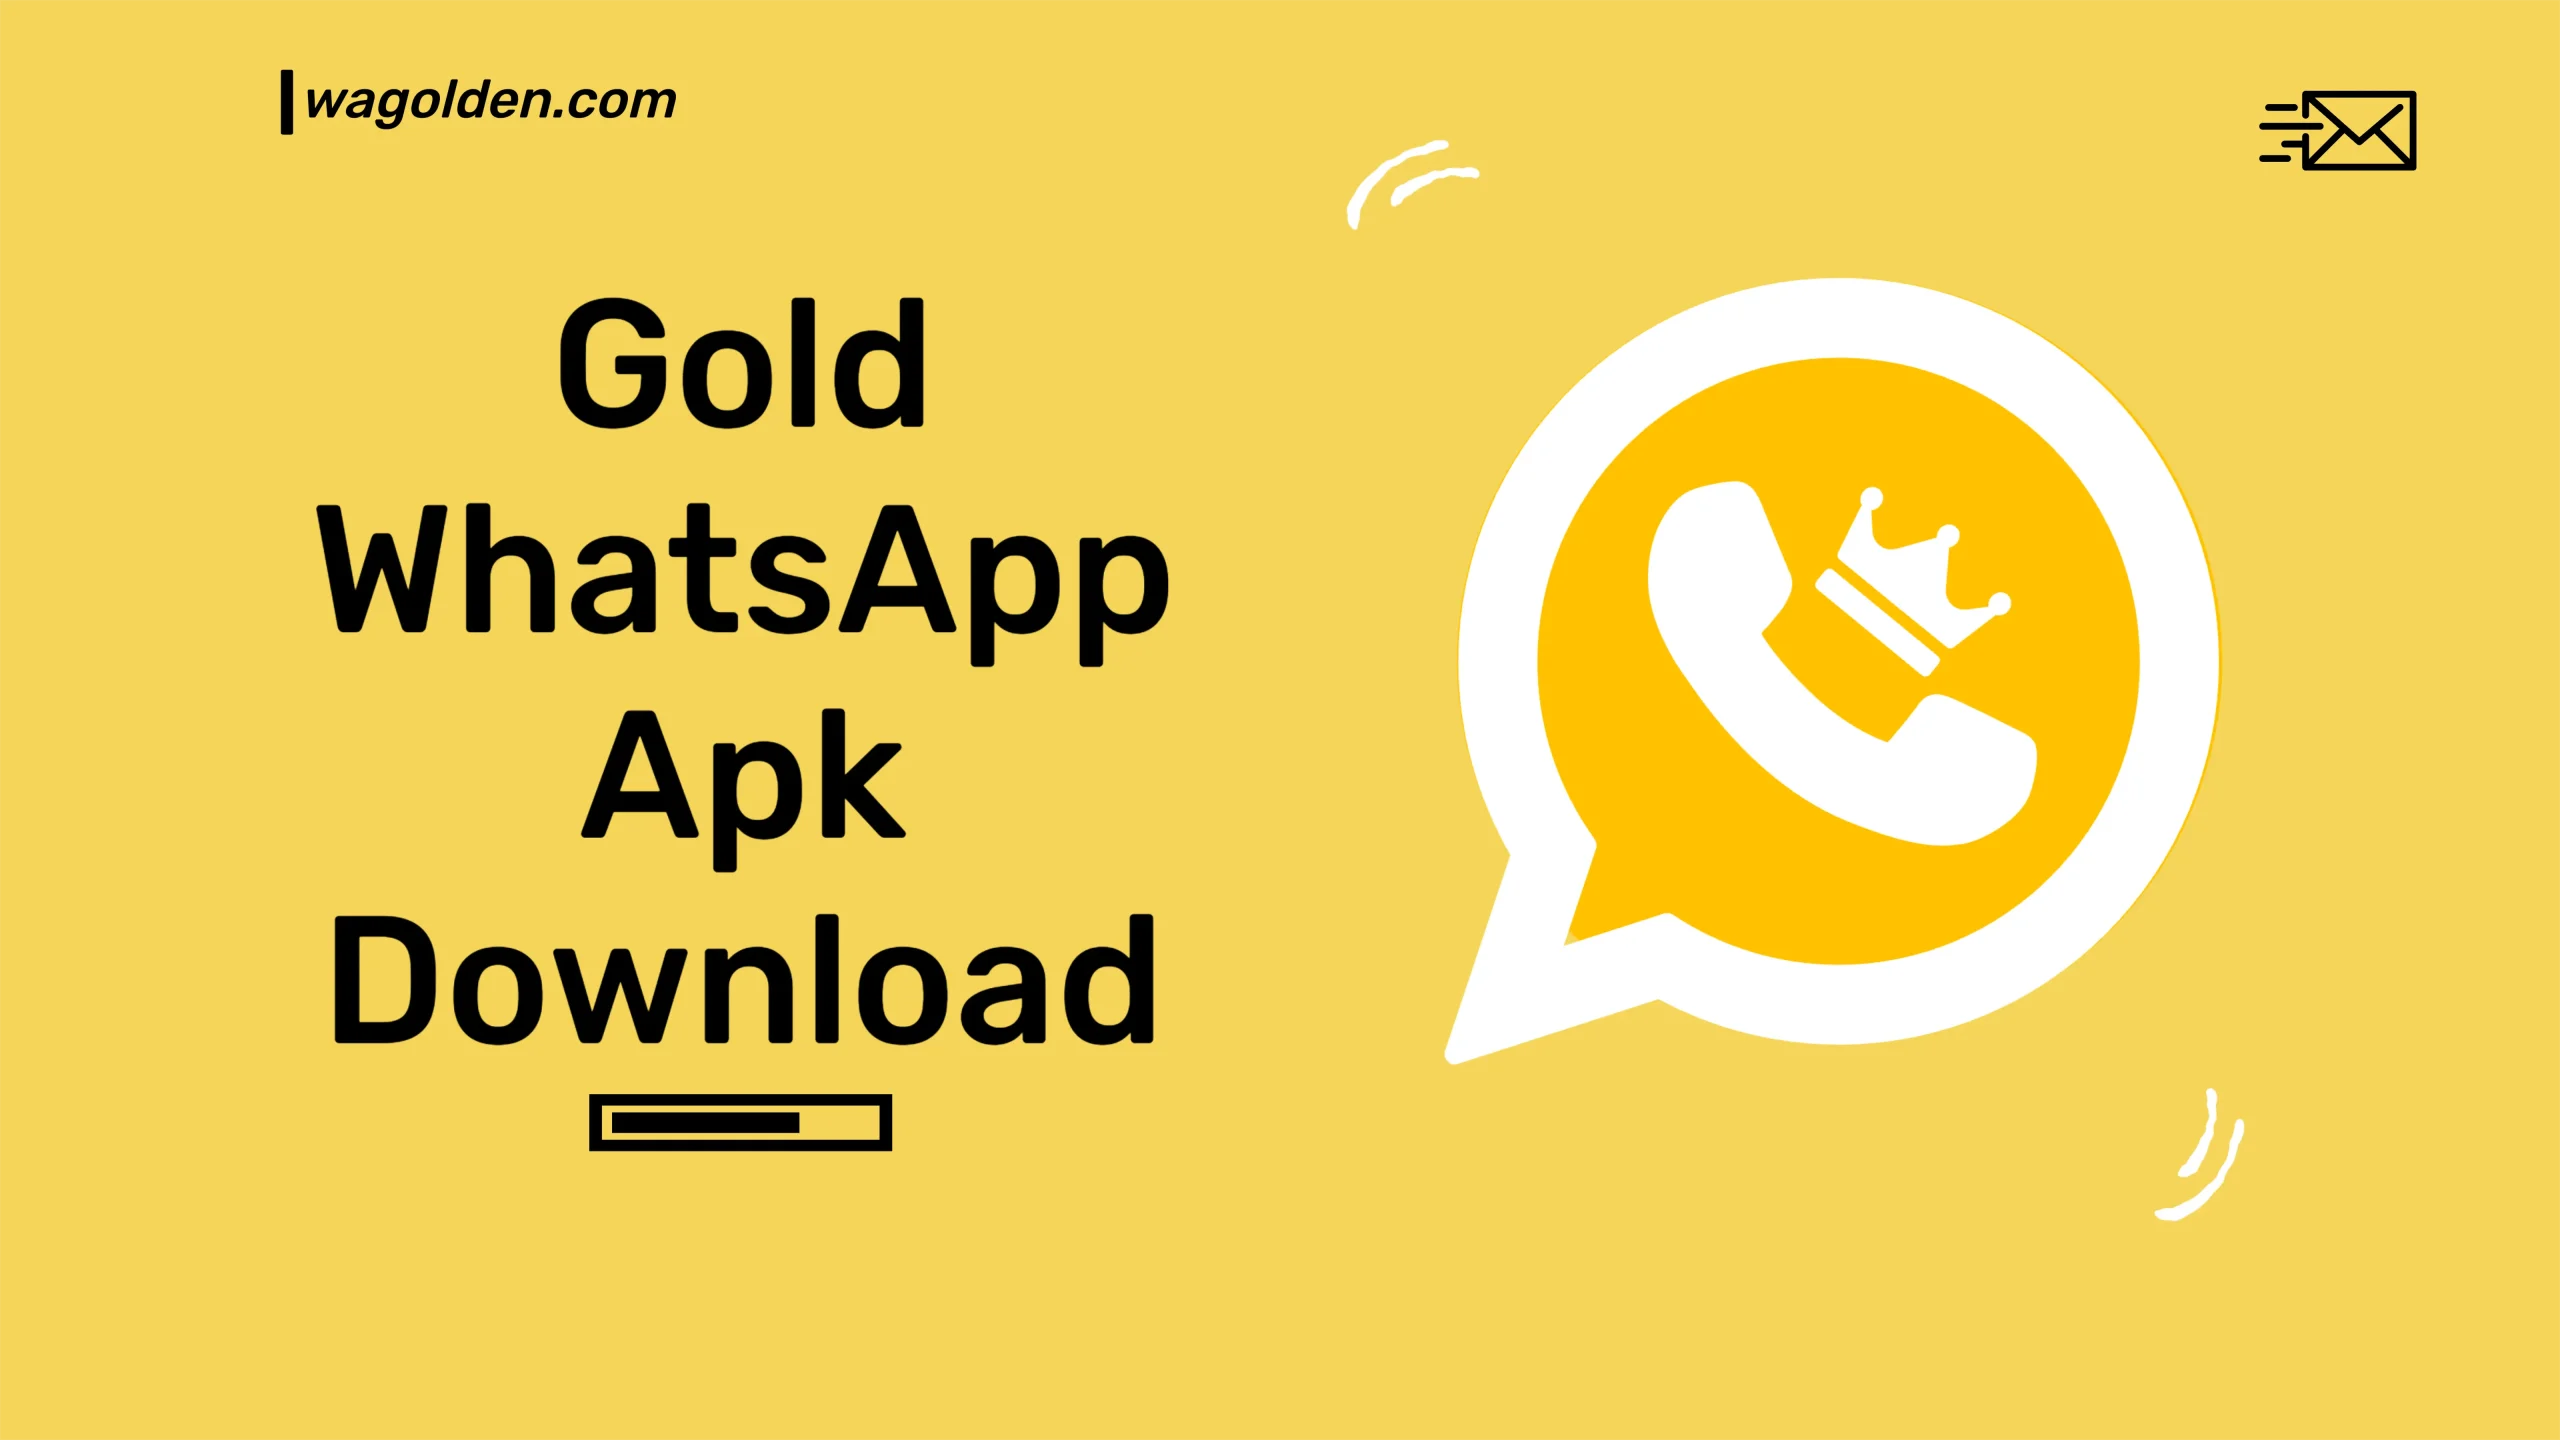 gold whatsapp - gold whatsapp apk download - download gold whatsapp apk - golden whatsapp - golden whatsapp apk - whatsapp apk gold - arabic whatsapp gold – download gold whatsapp